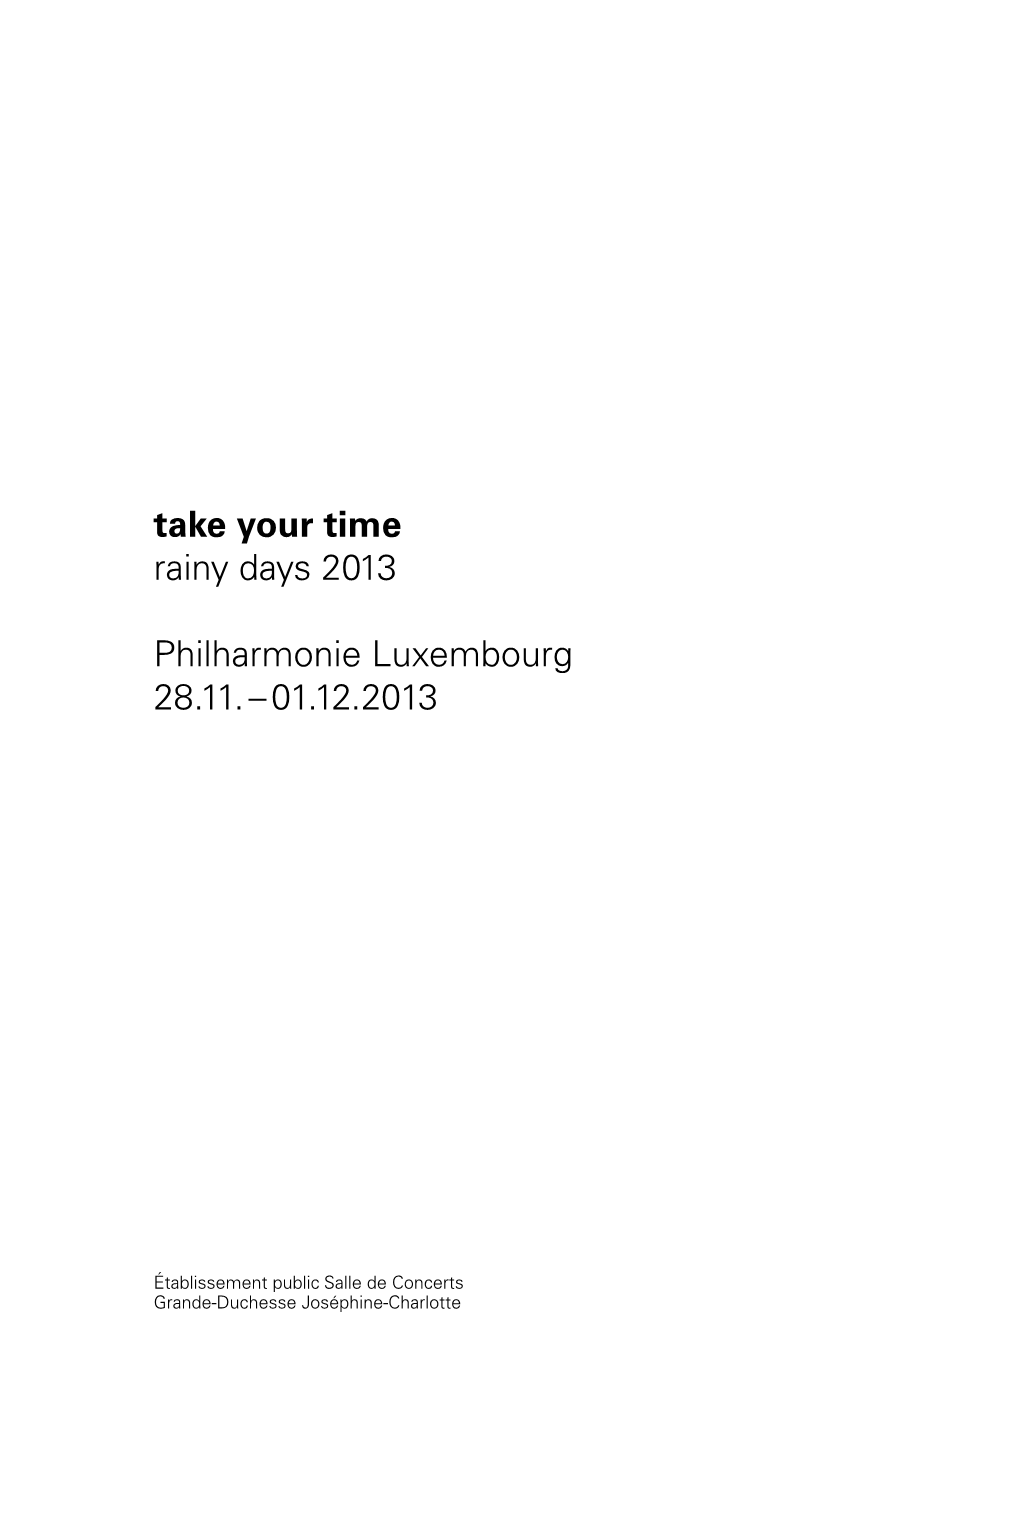 Take Your Time Rainy Days 2013 Philharmonie Luxembourg 28.11